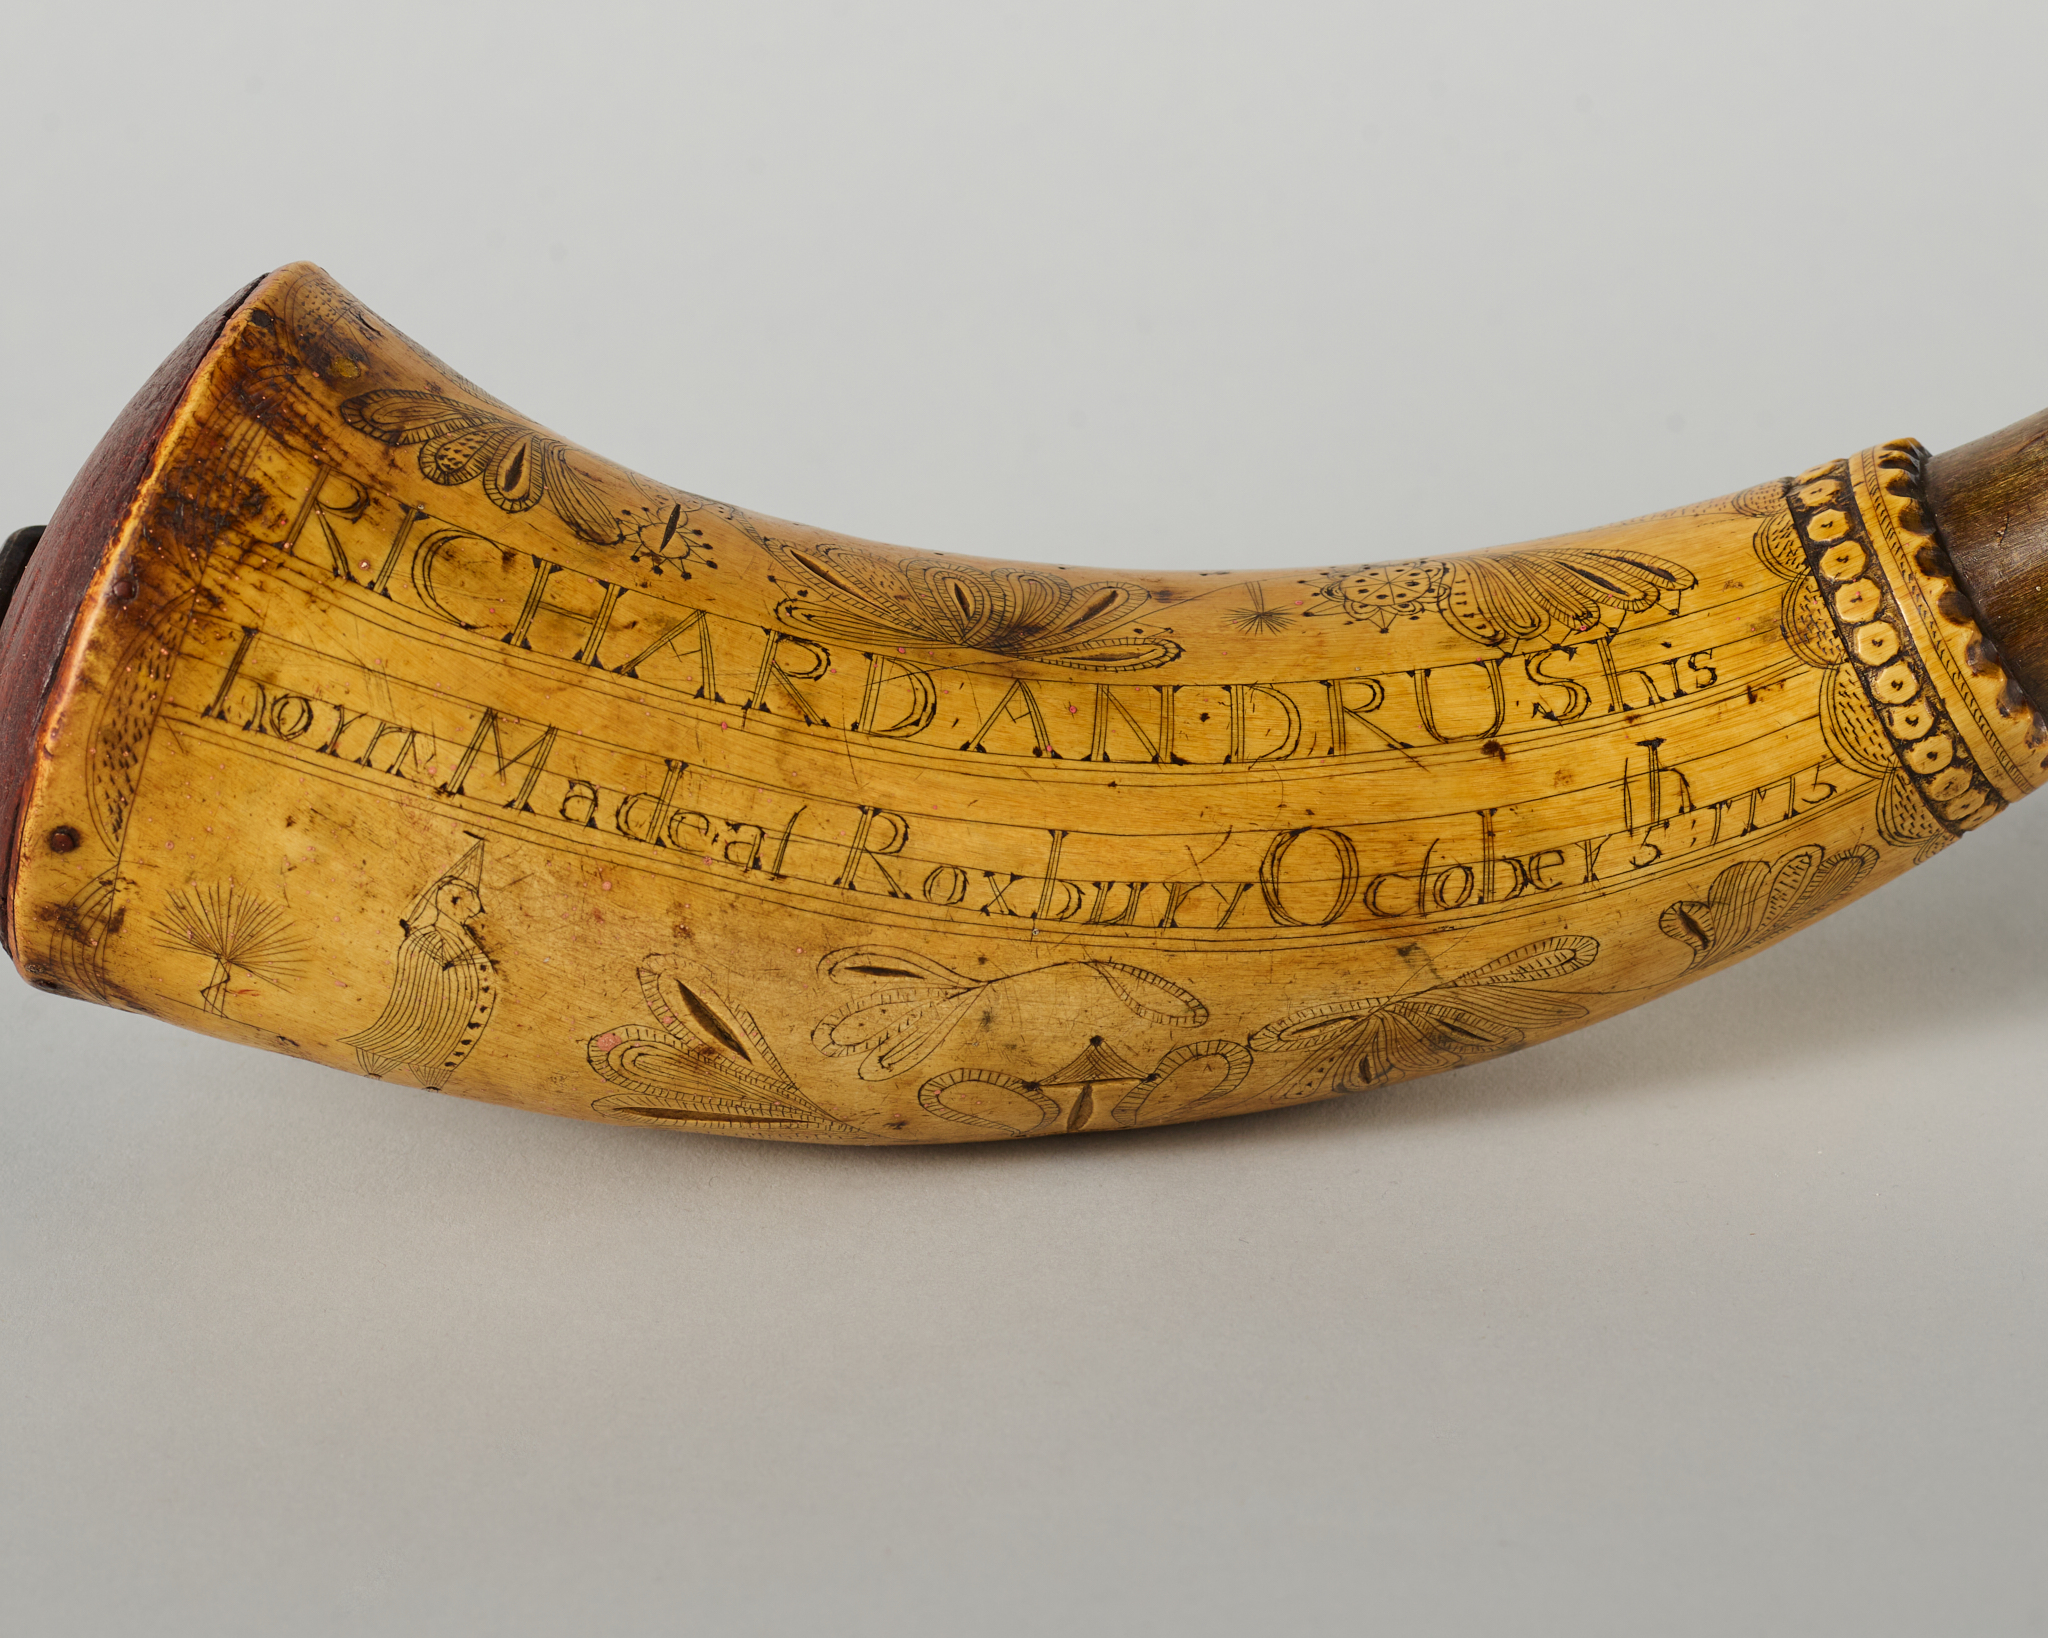 Richard Andrus His Horn, Made at Roxbury October 5th 1775